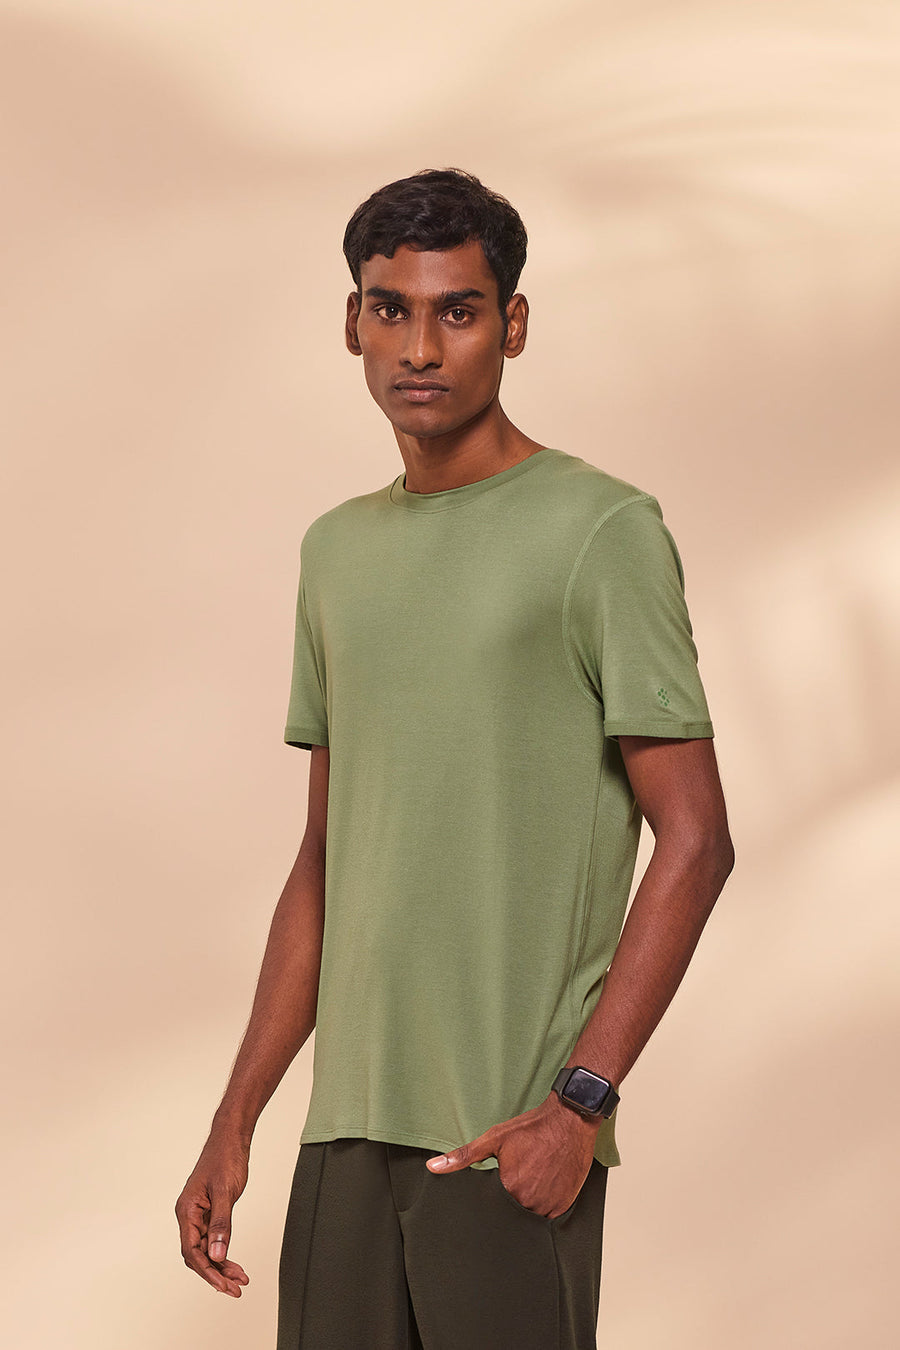 Smooth & Easy T-shirt Green - Sensing